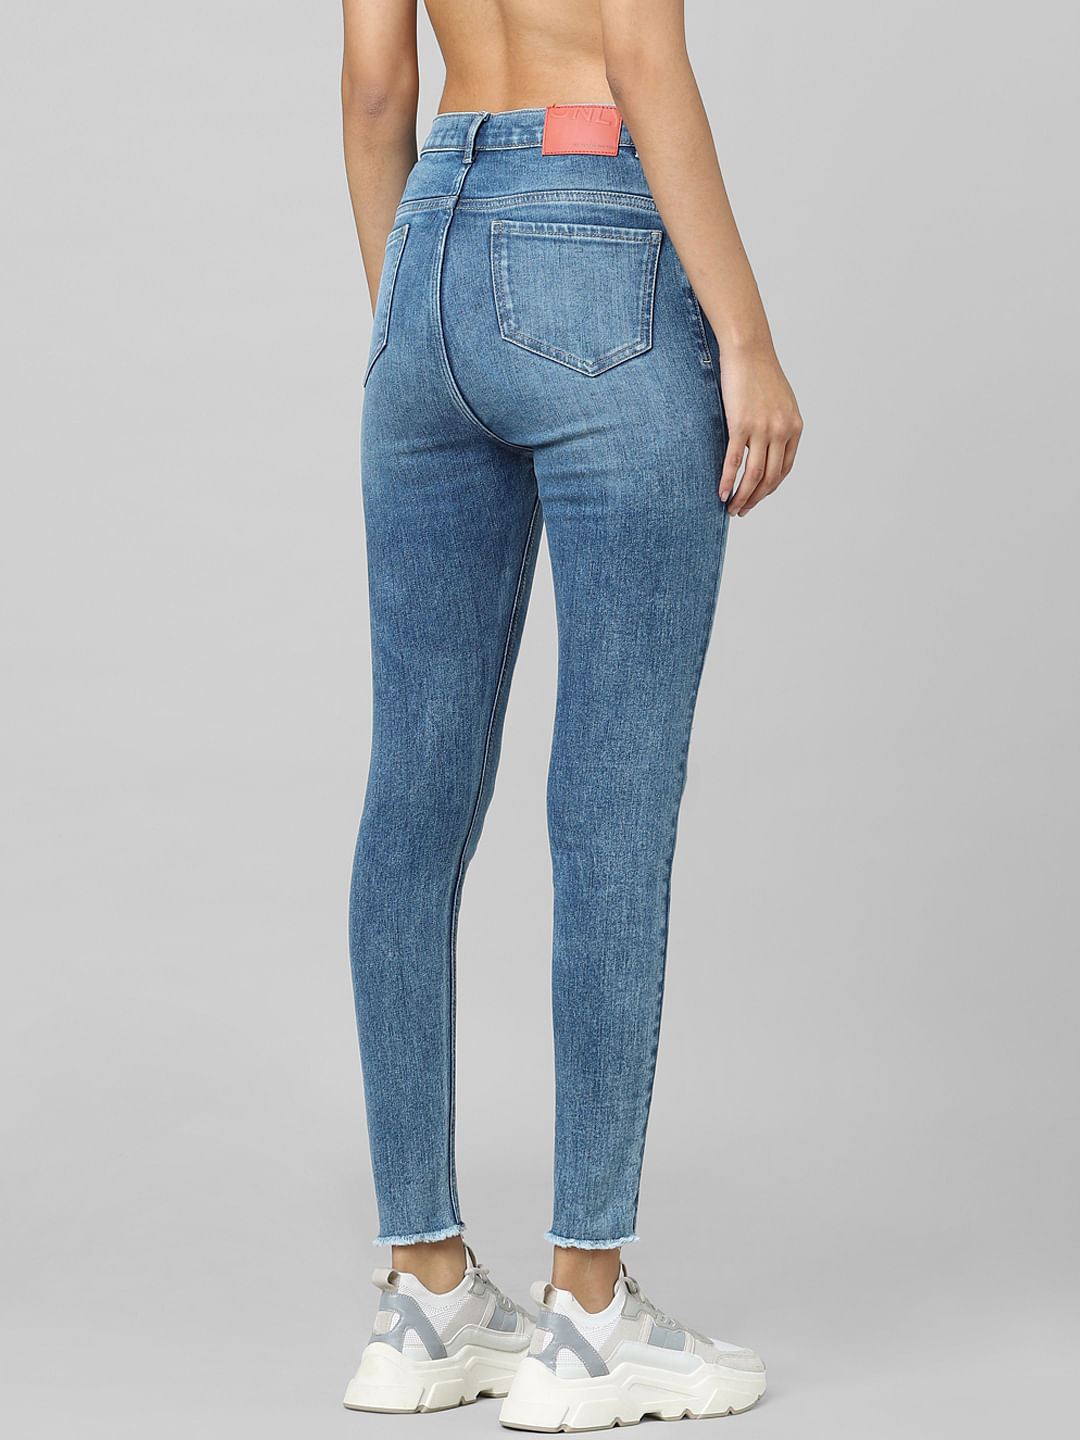 Undercover Slim Fit Distressed Denim Jeans, $540 | MR PORTER | Lookastic